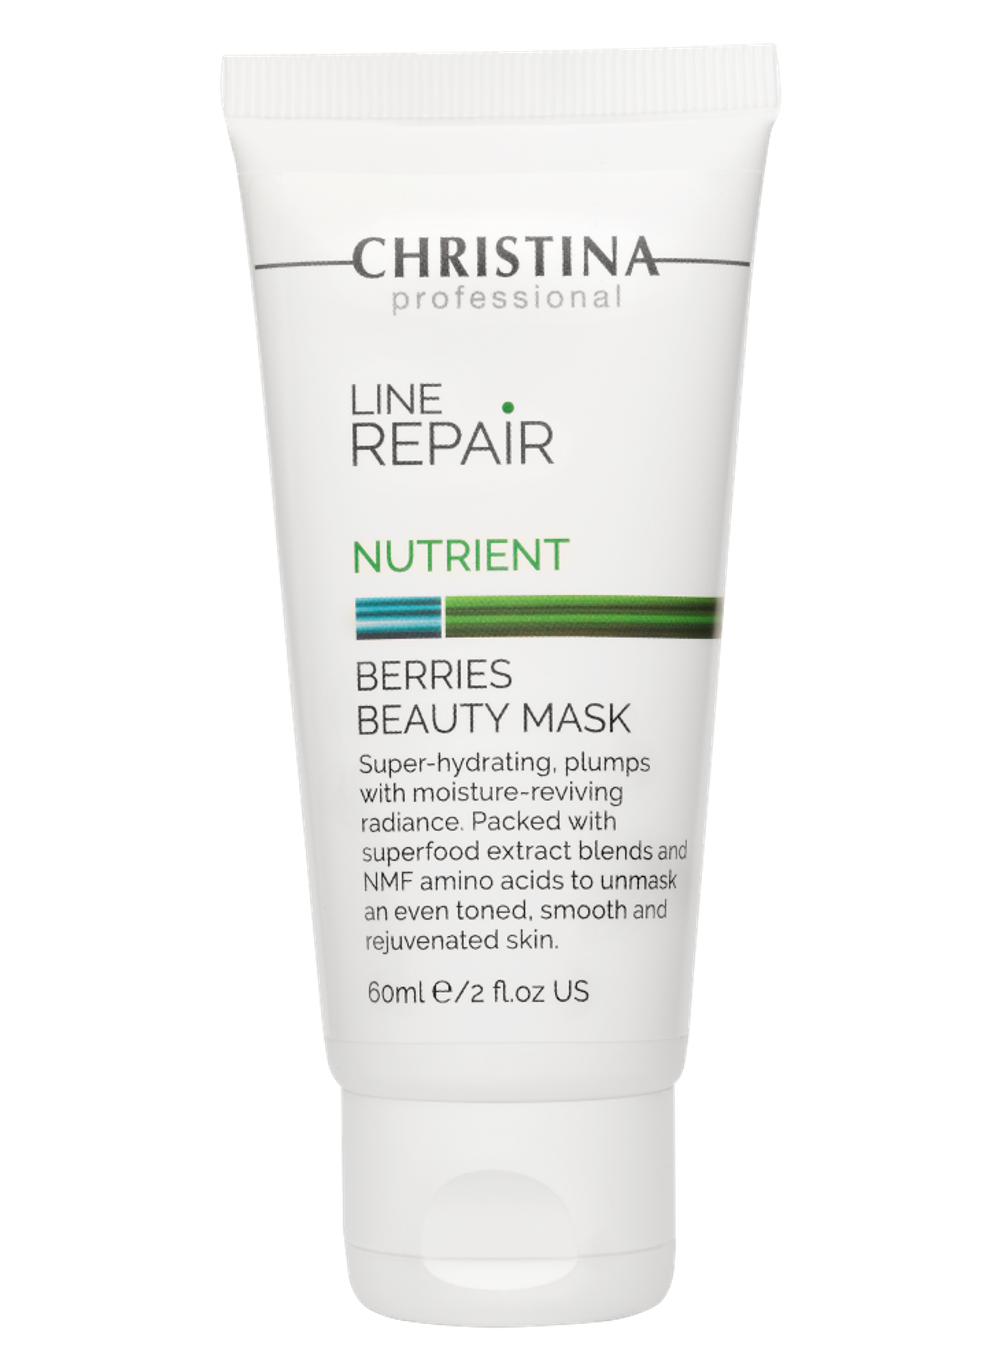 CHRISTINA Line Repair Nutrient Berries Beauty Mask